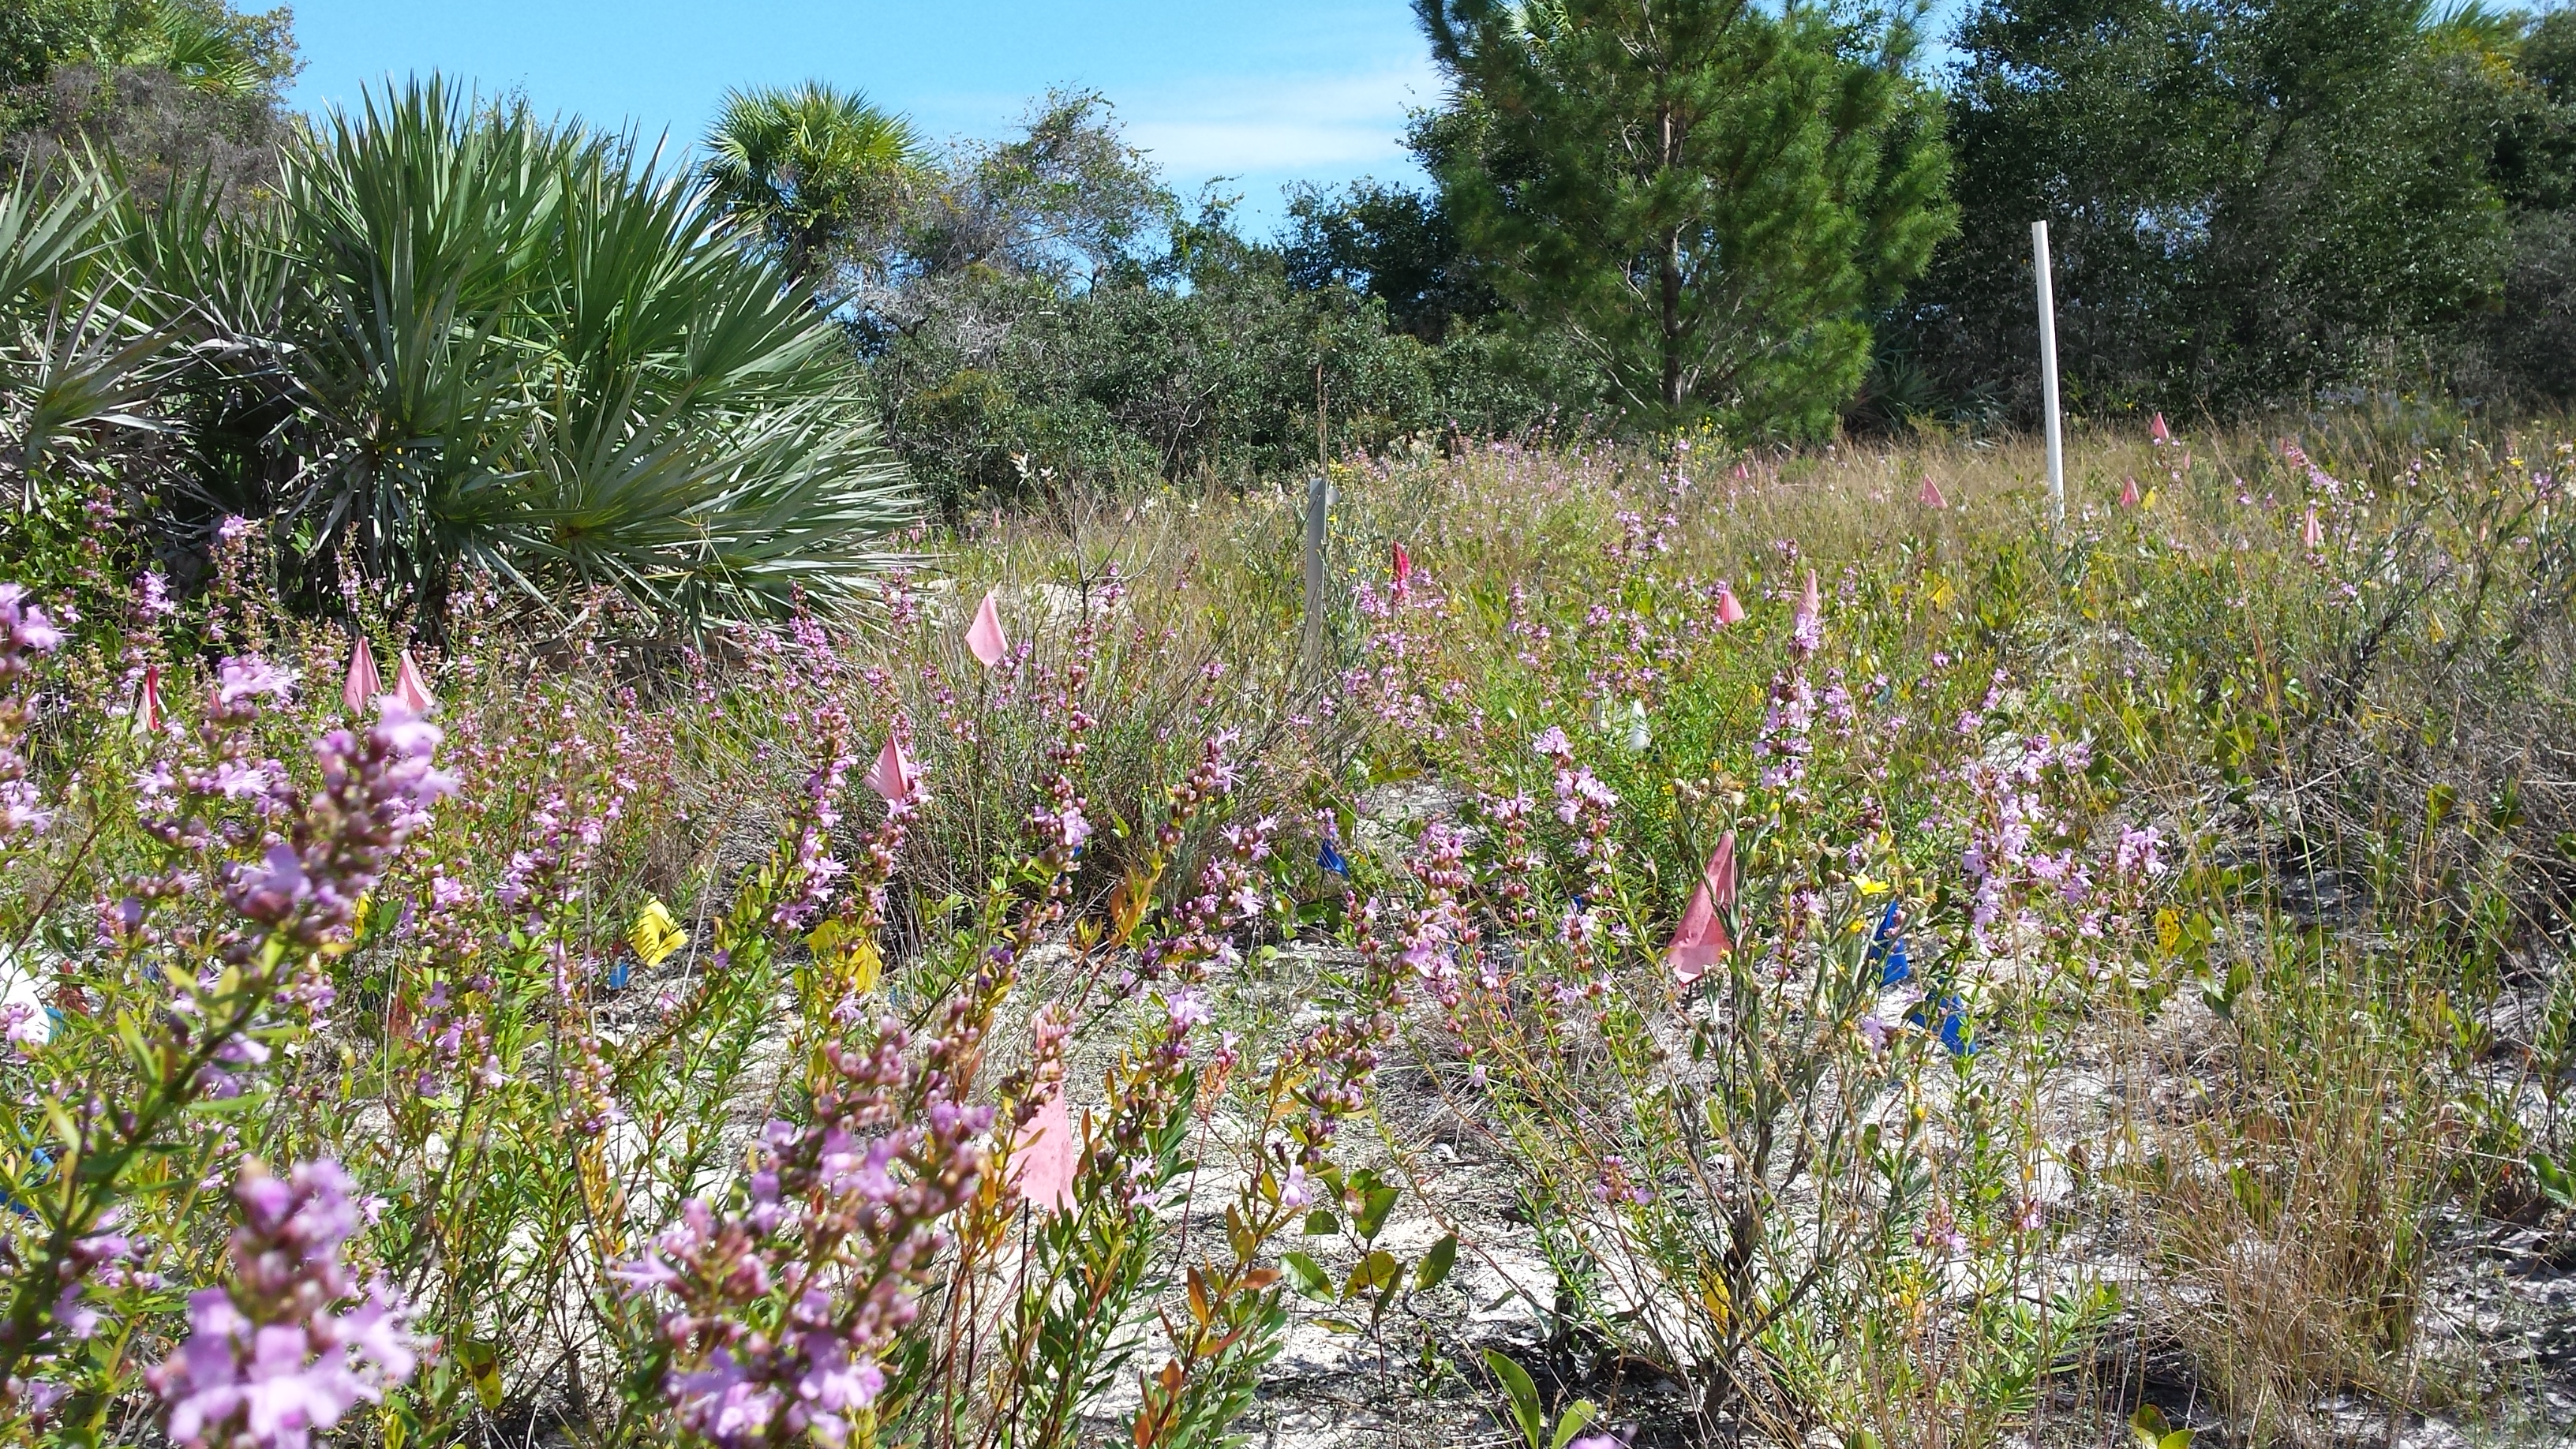 The endangered Savannas mint population thrives at Savannas Preserve State Park.